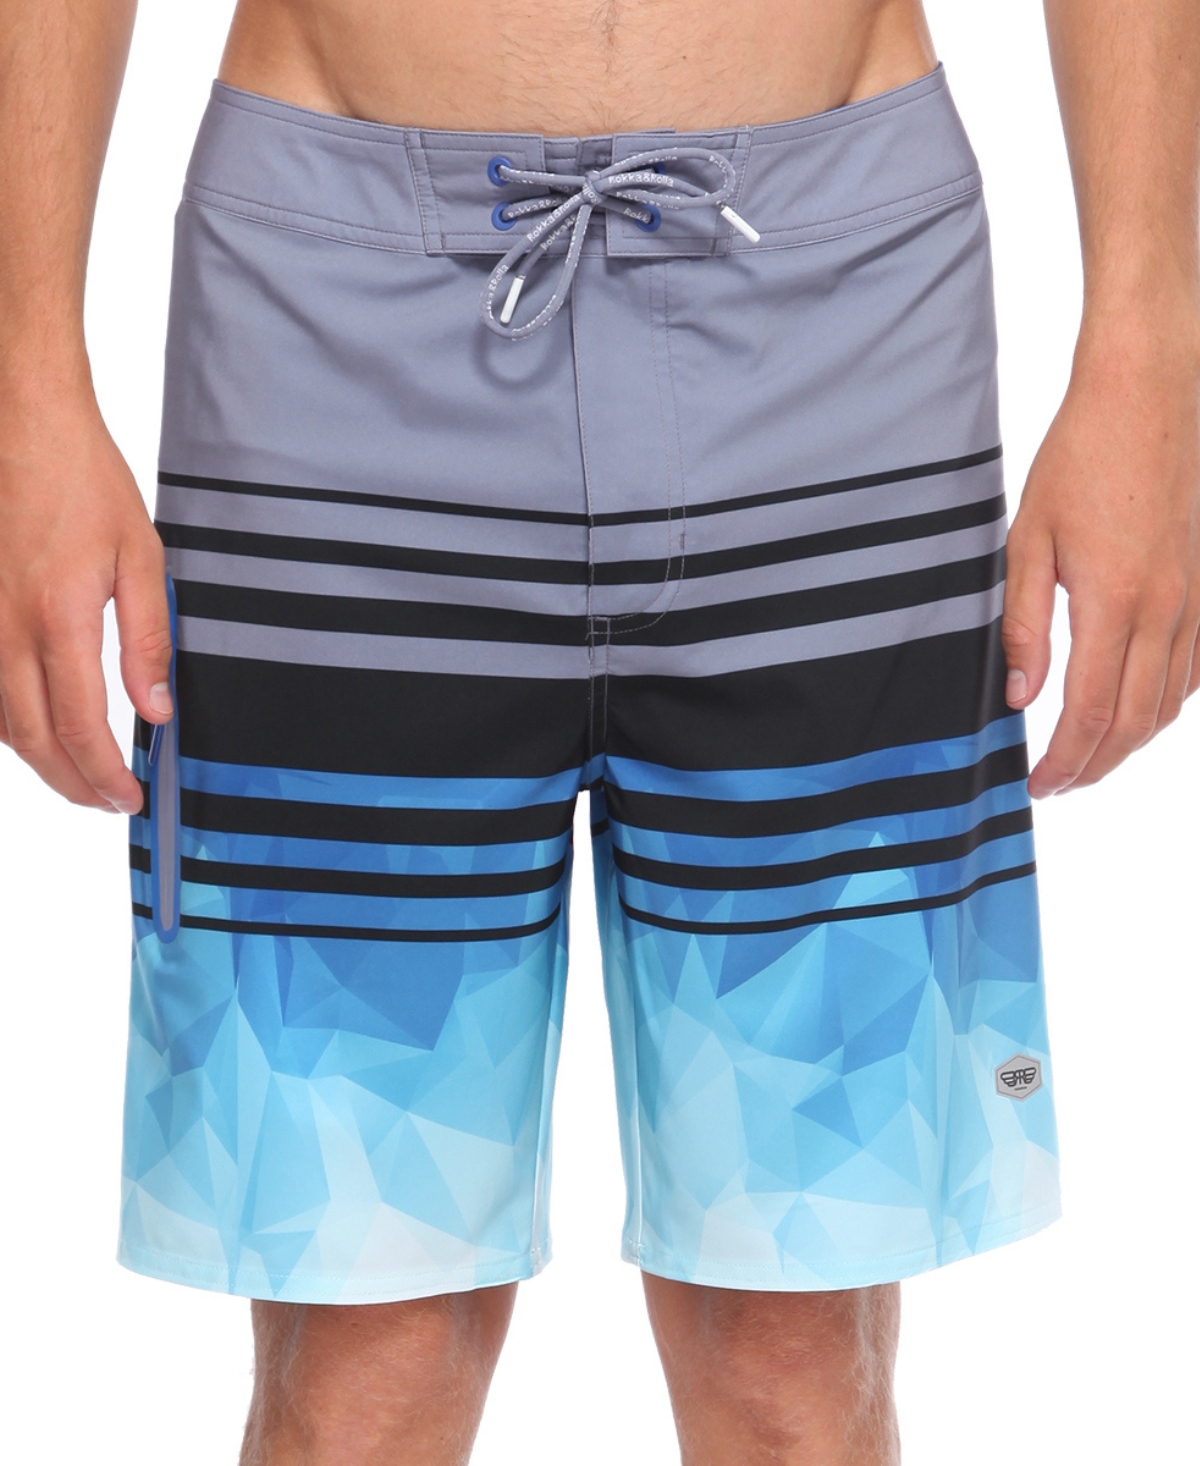 Men's 9" No Mesh Liner Board Shorts Quick Dry Swim Trunks - Leaves color block